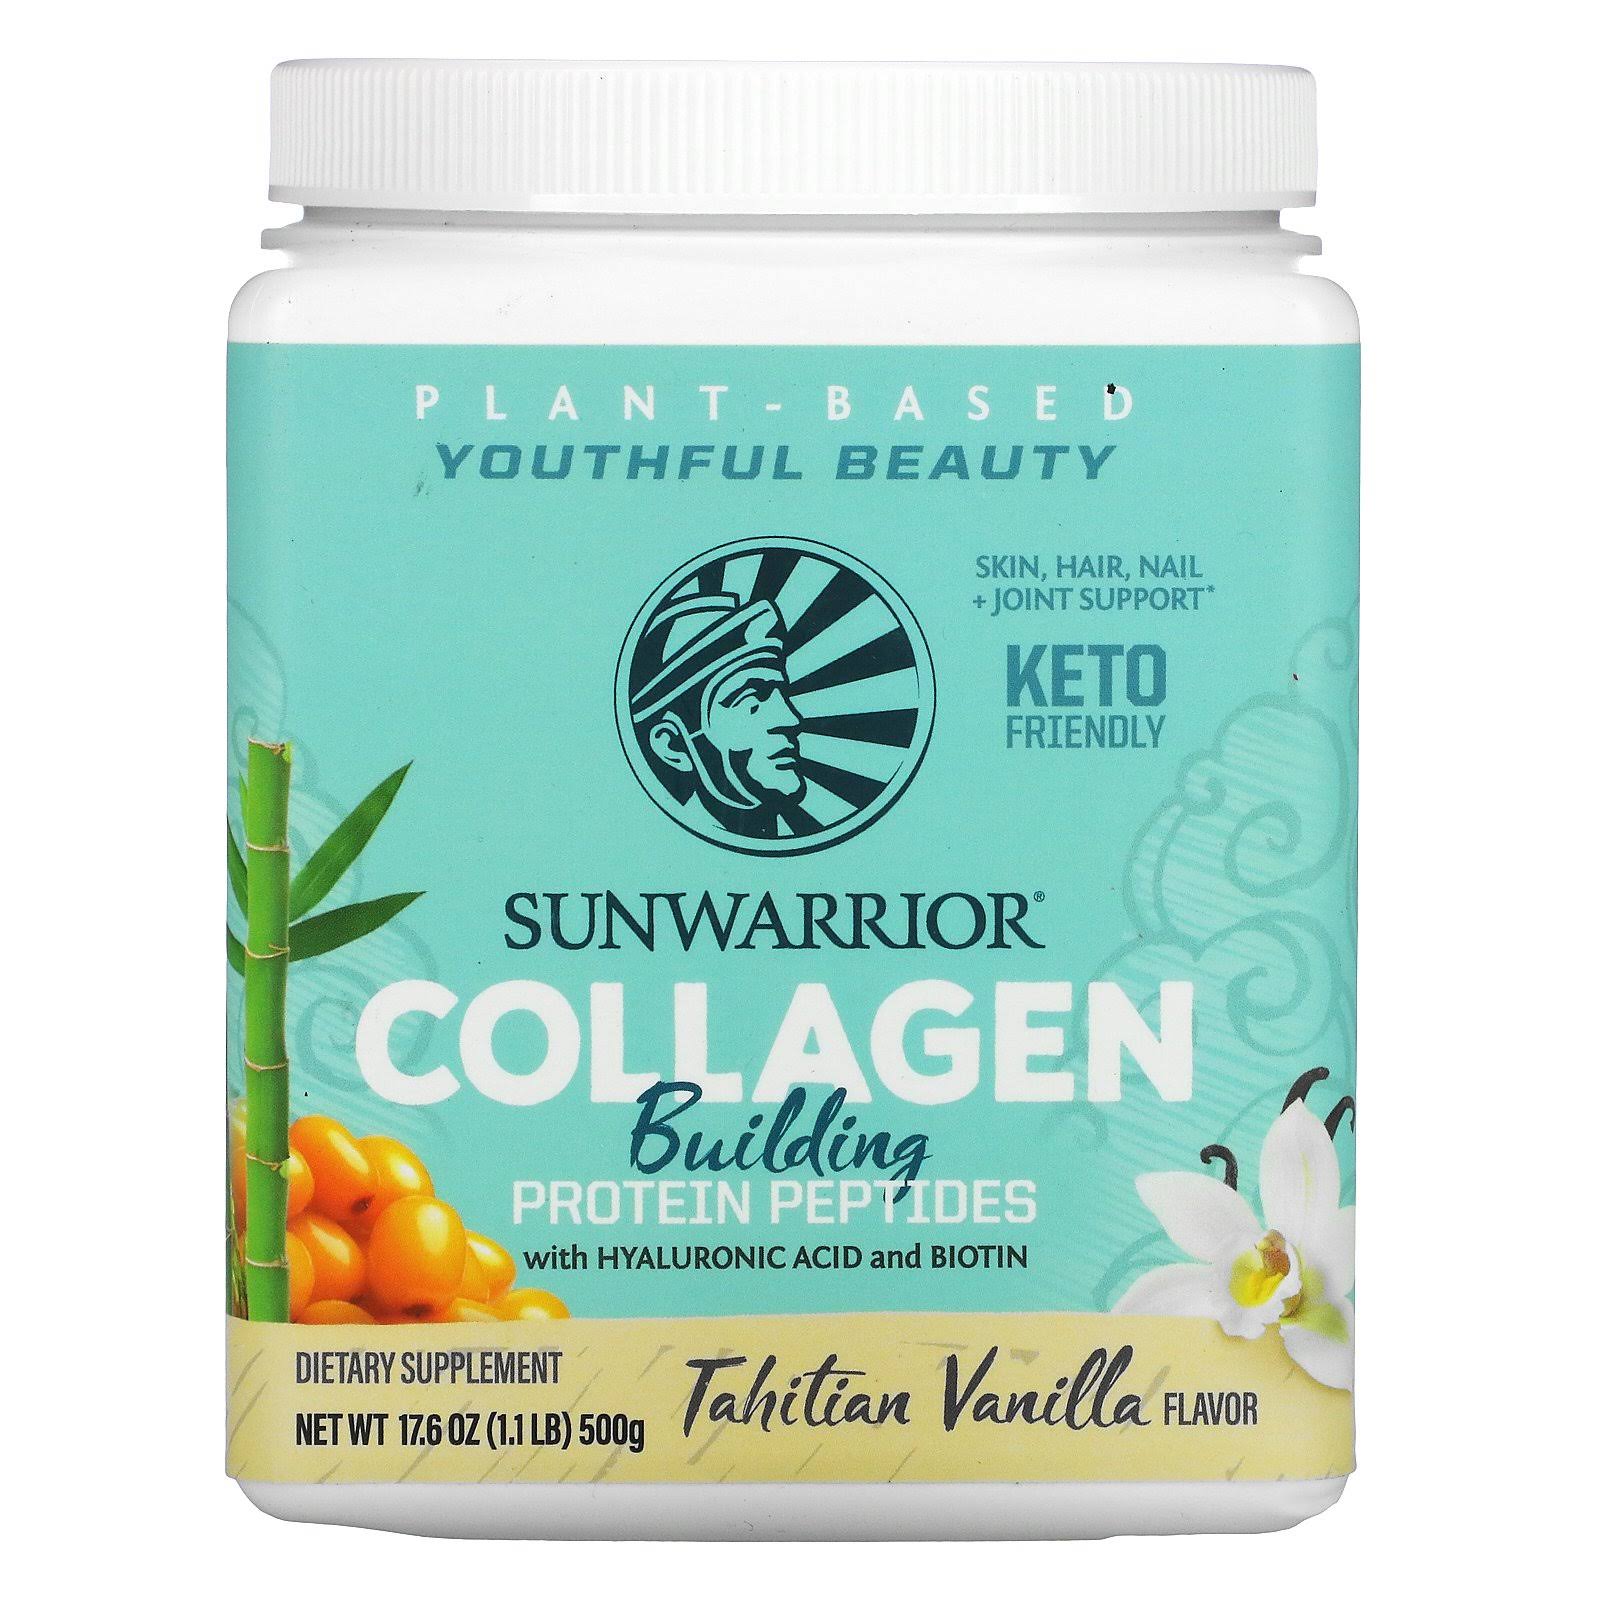 Sunwarrior Collagen Building Protein Peptides Tahitian Vanilla